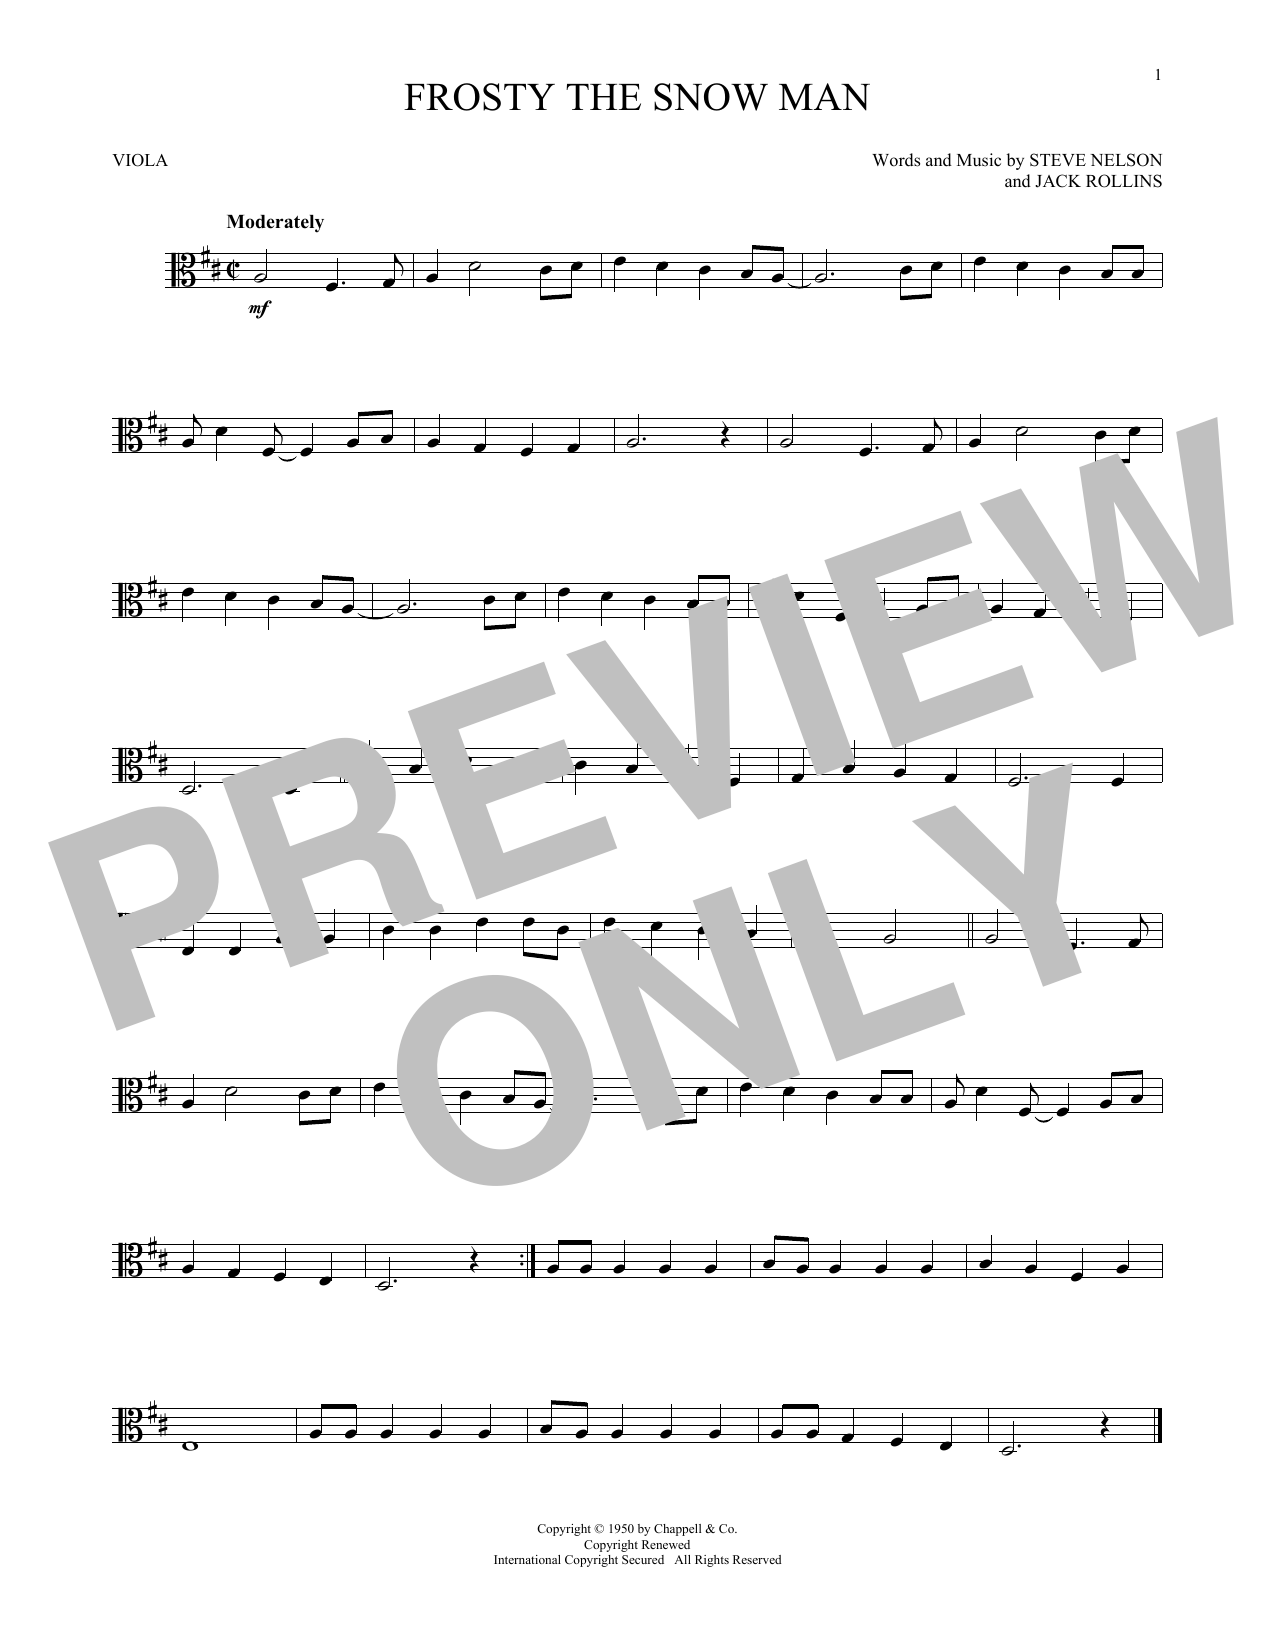 Download Gene Autry Frosty The Snowman Sheet Music